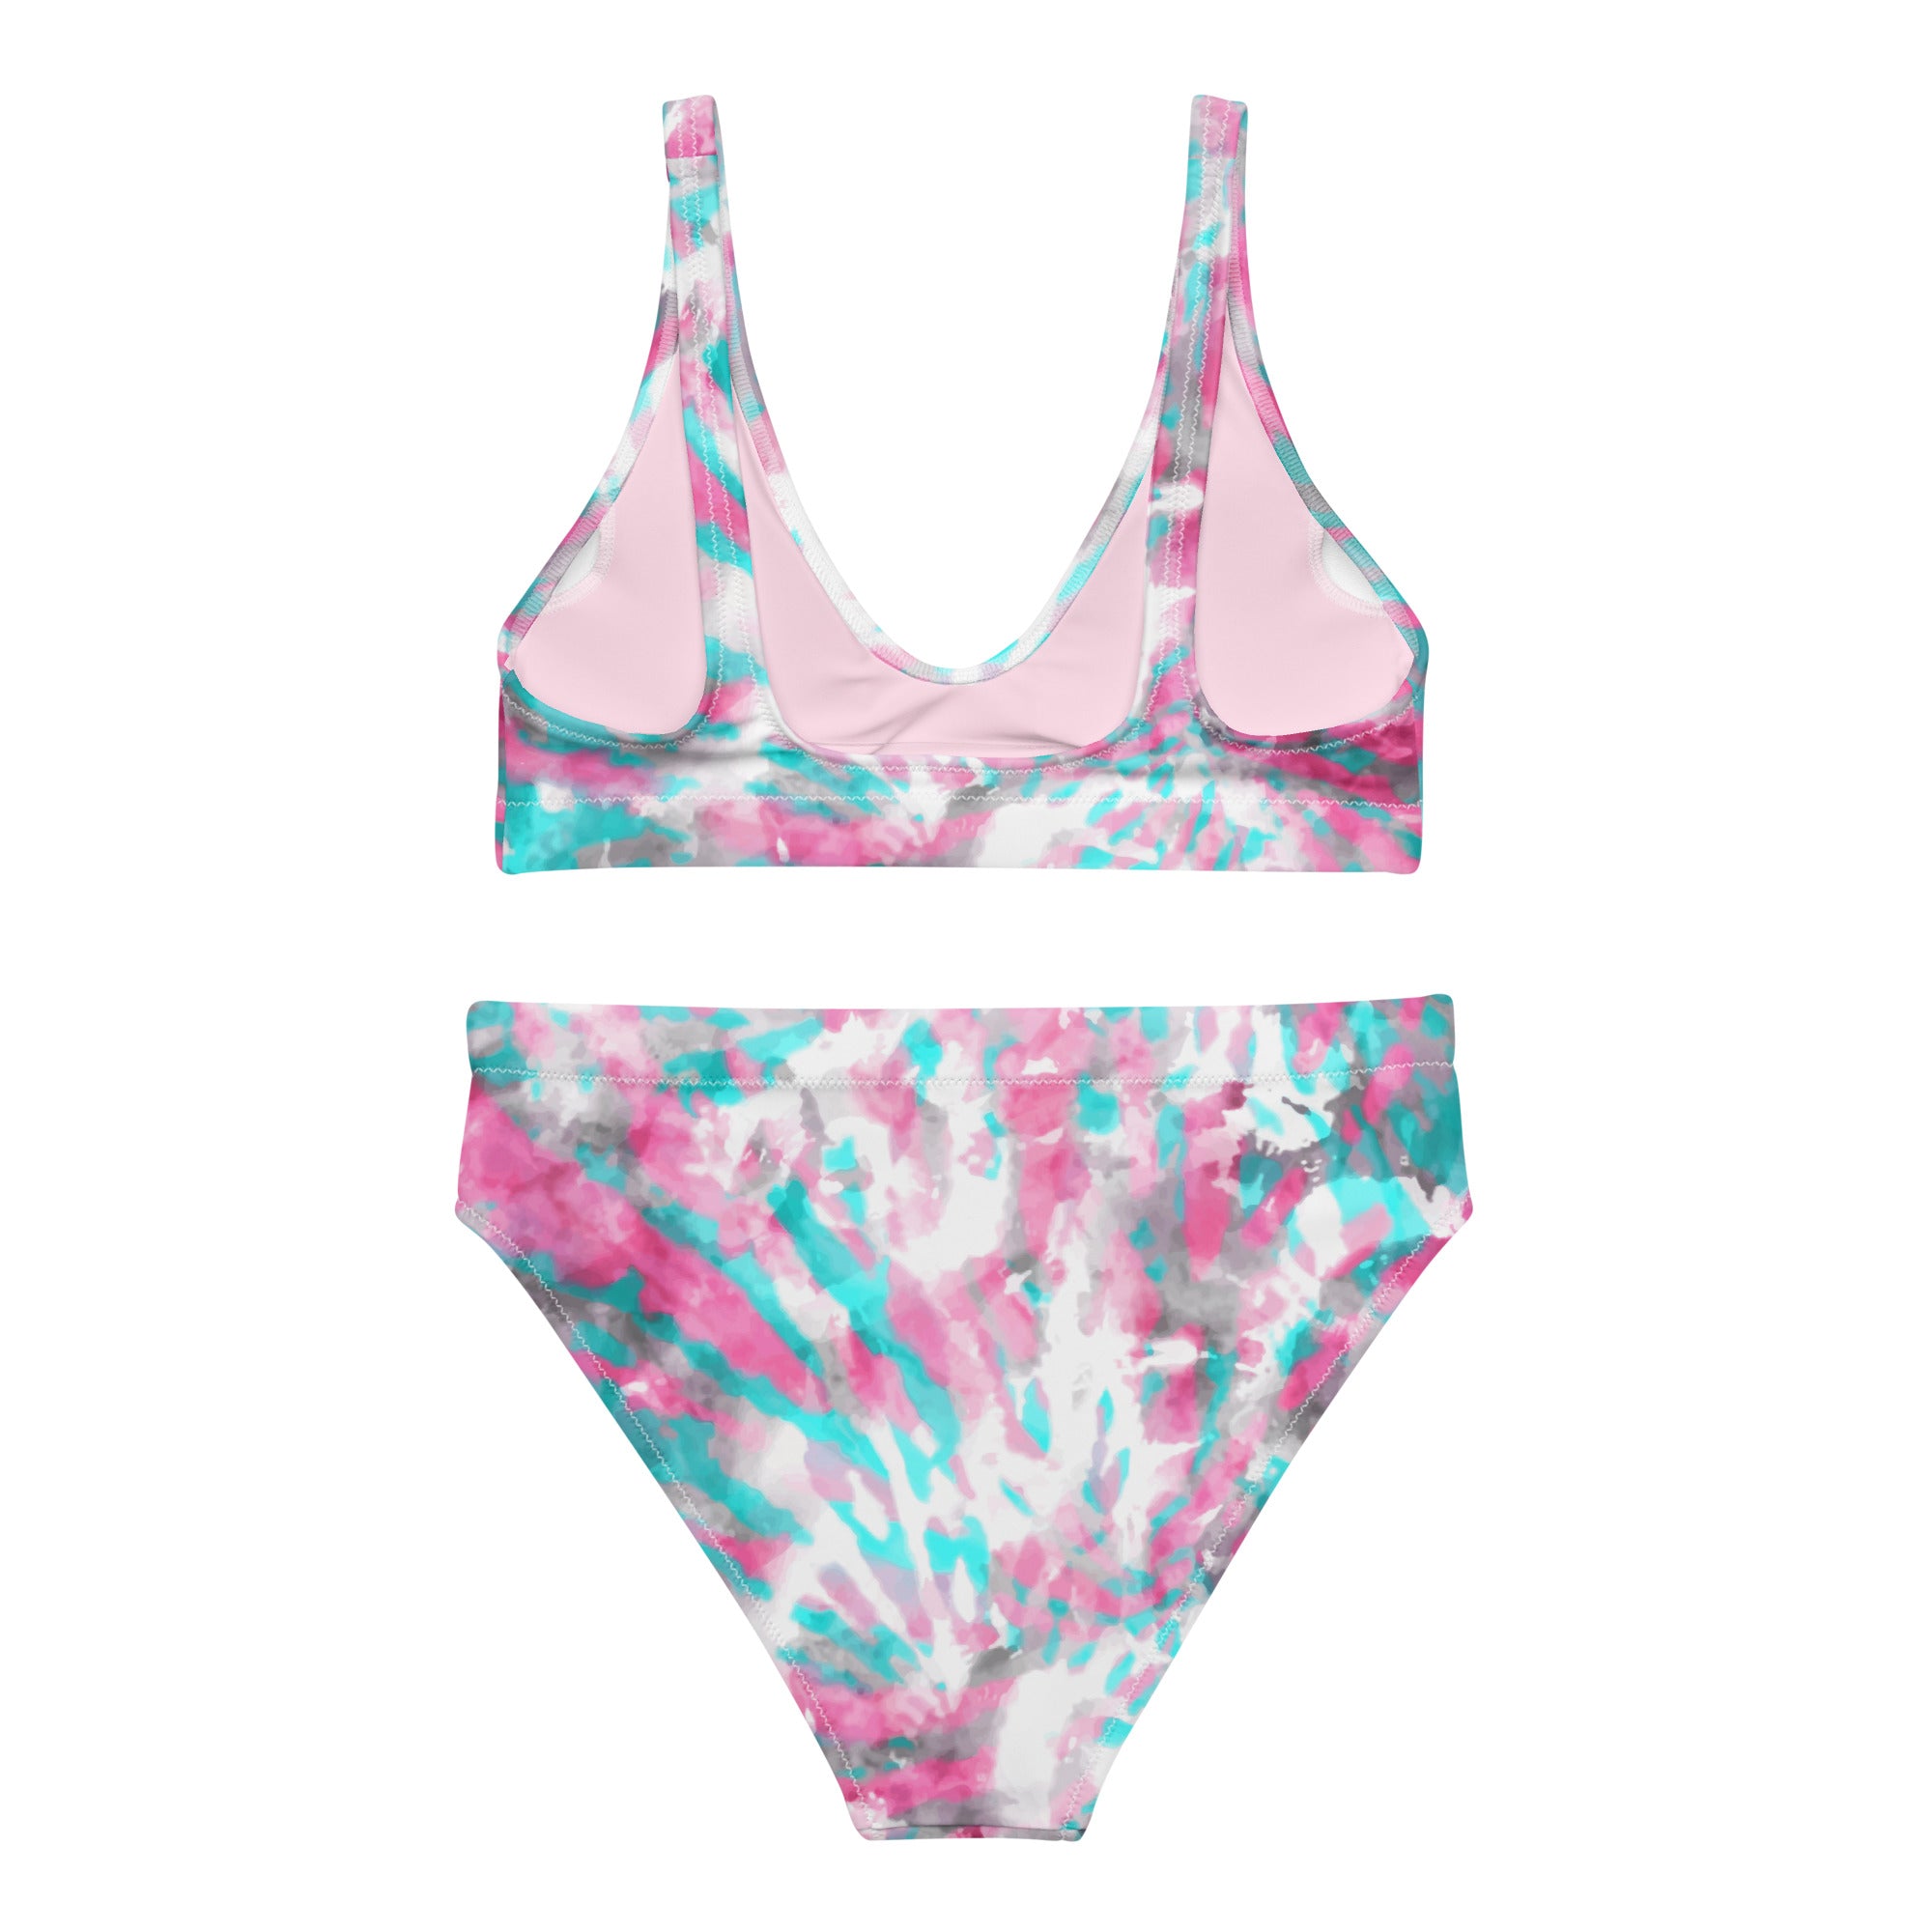 Recycled high-waisted bikini- Hang Loose Tie Dye Pattern 04